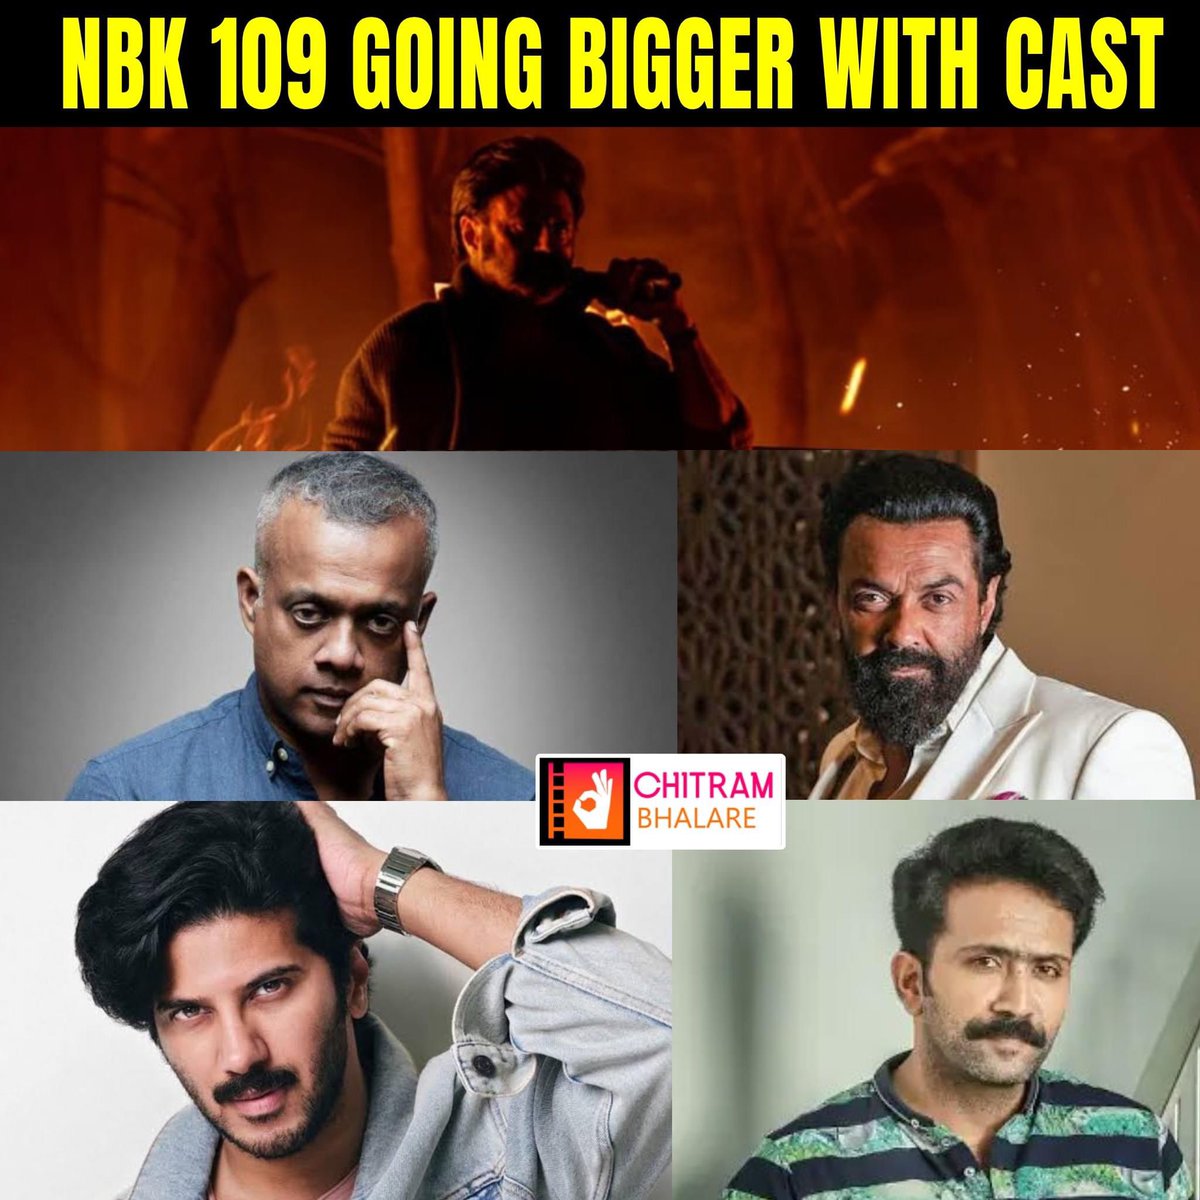 #NBK109 Cast as of now and its going very big 

#NandamuriBalakrishna 🔥🔥🔥

#DulquerSalmaan #ShineTomChacko #VasudevMenon #BobbyDeol